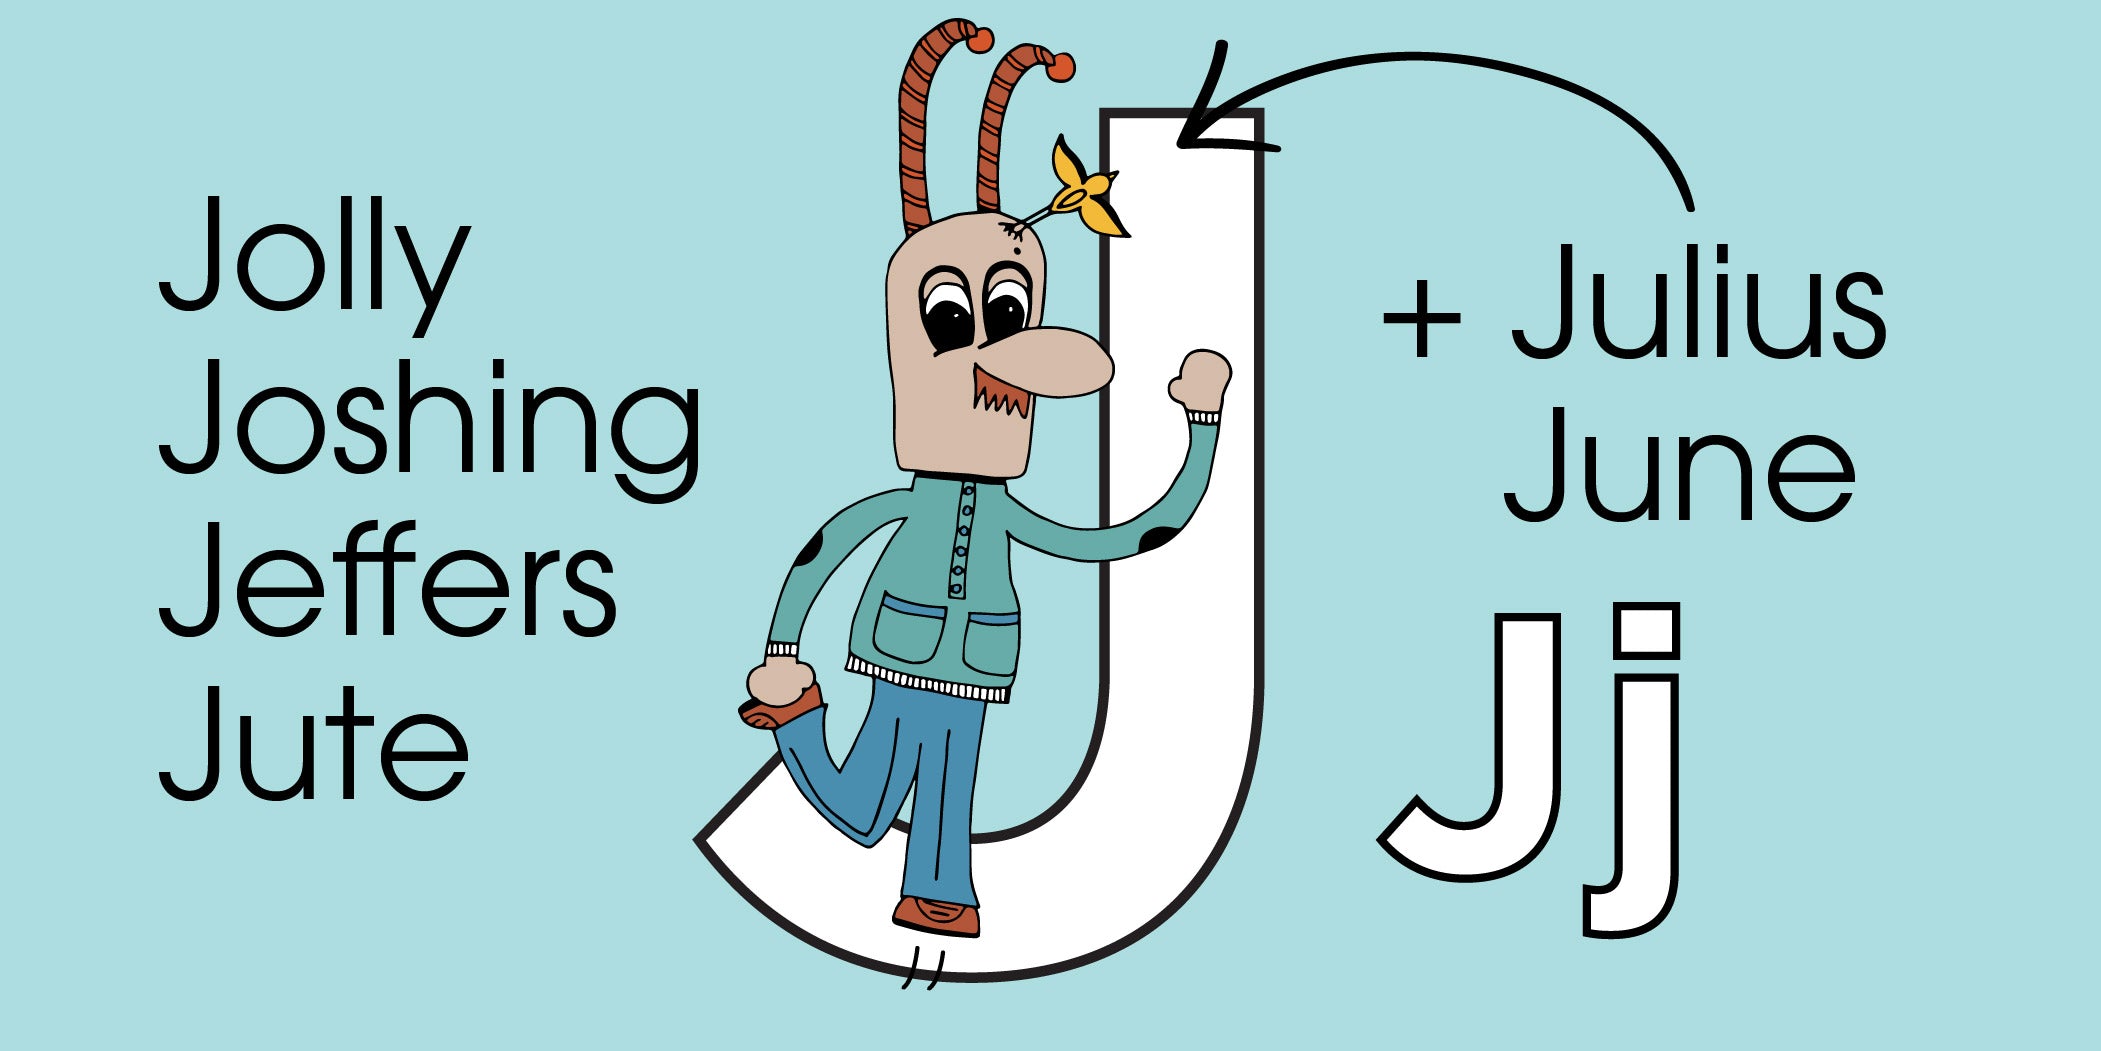 The Letter J: Jolly Joshing Jeffers Jute + Julius June